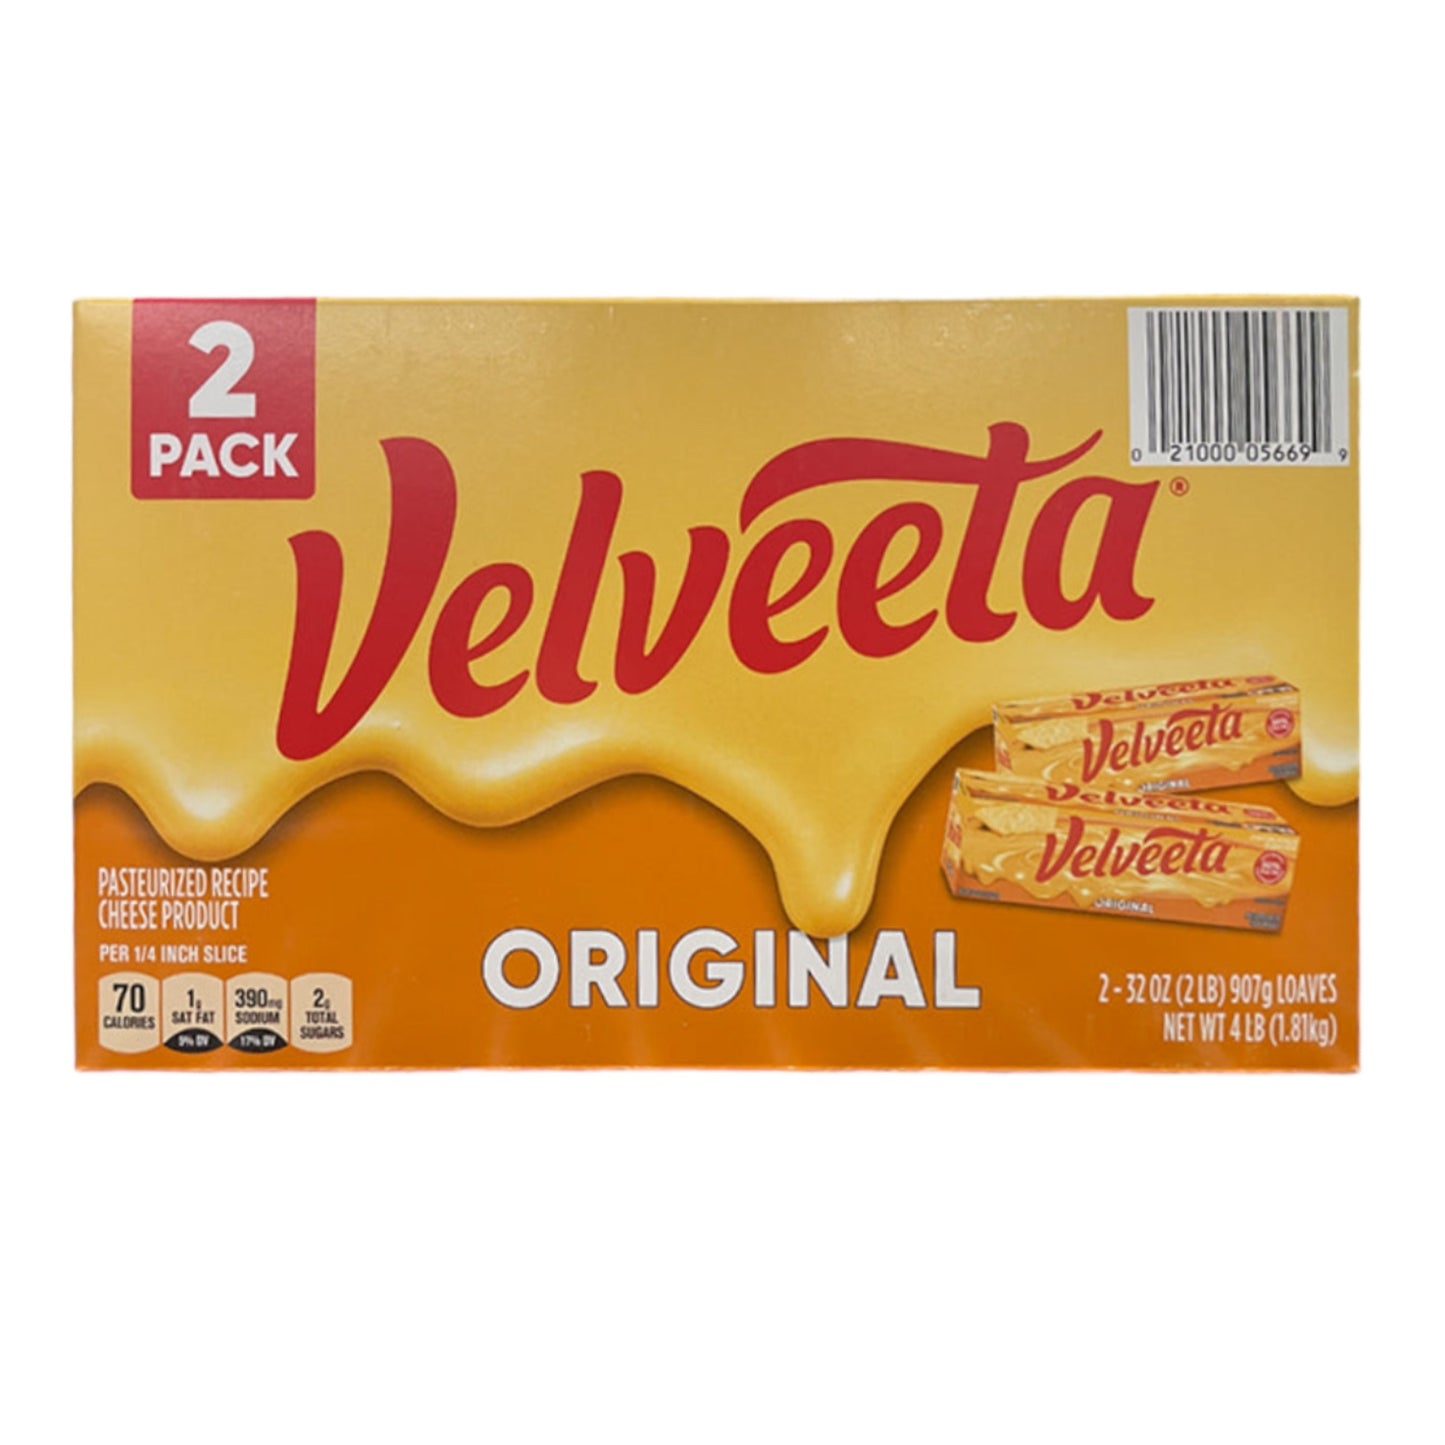 Velveeta Pasteurized Prepared Cheese Product Original, 32 oz (2 Pack)